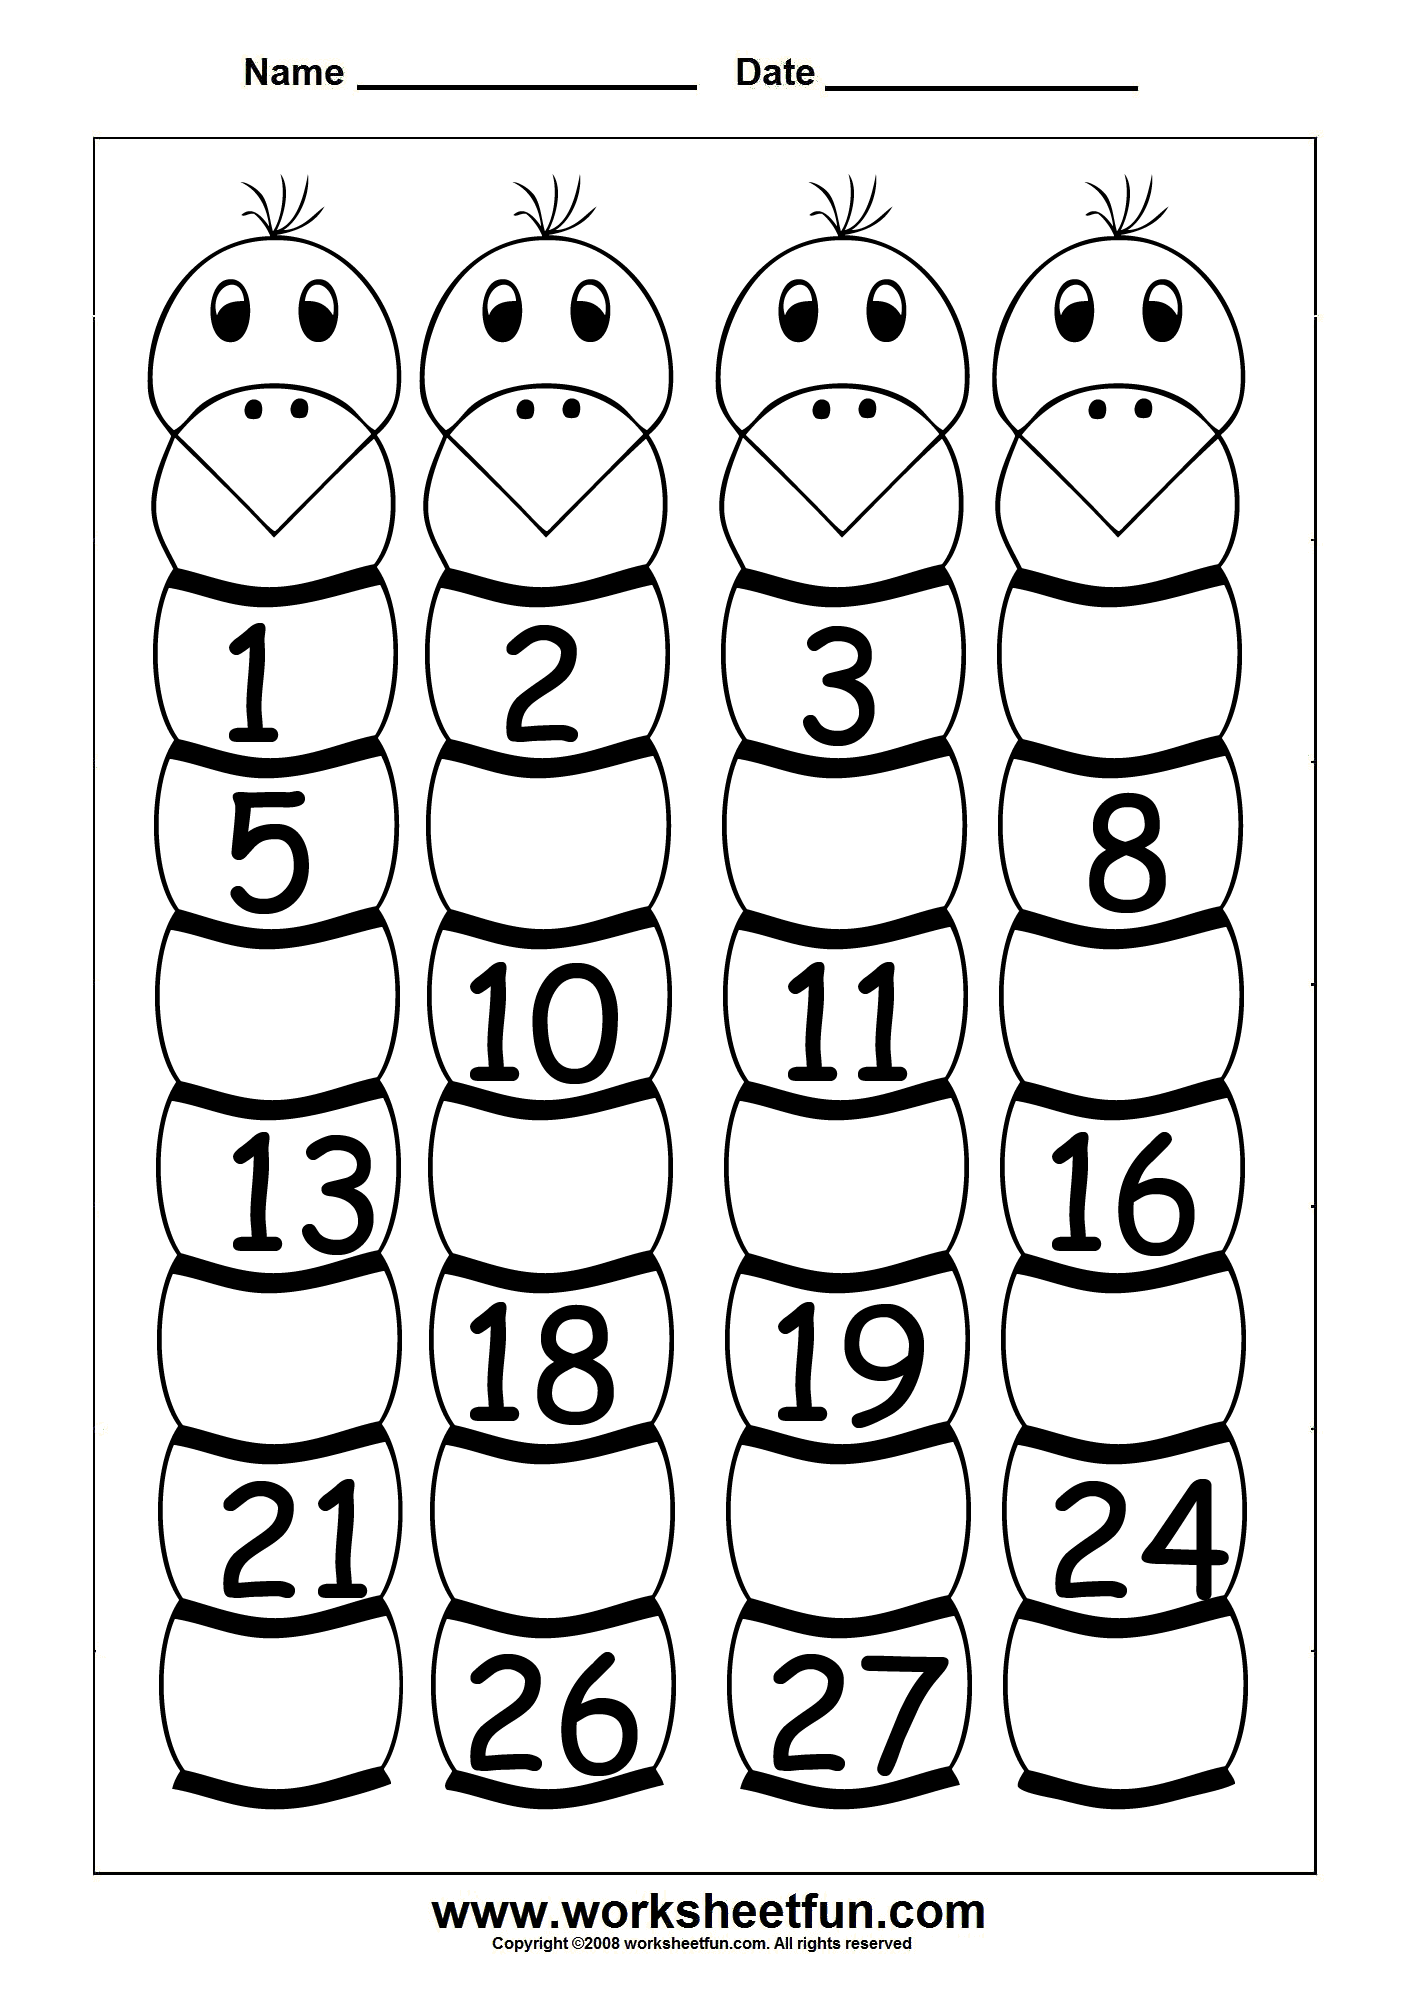 13-fill-in-missing-numbers-worksheets-kindergarten-worksheeto